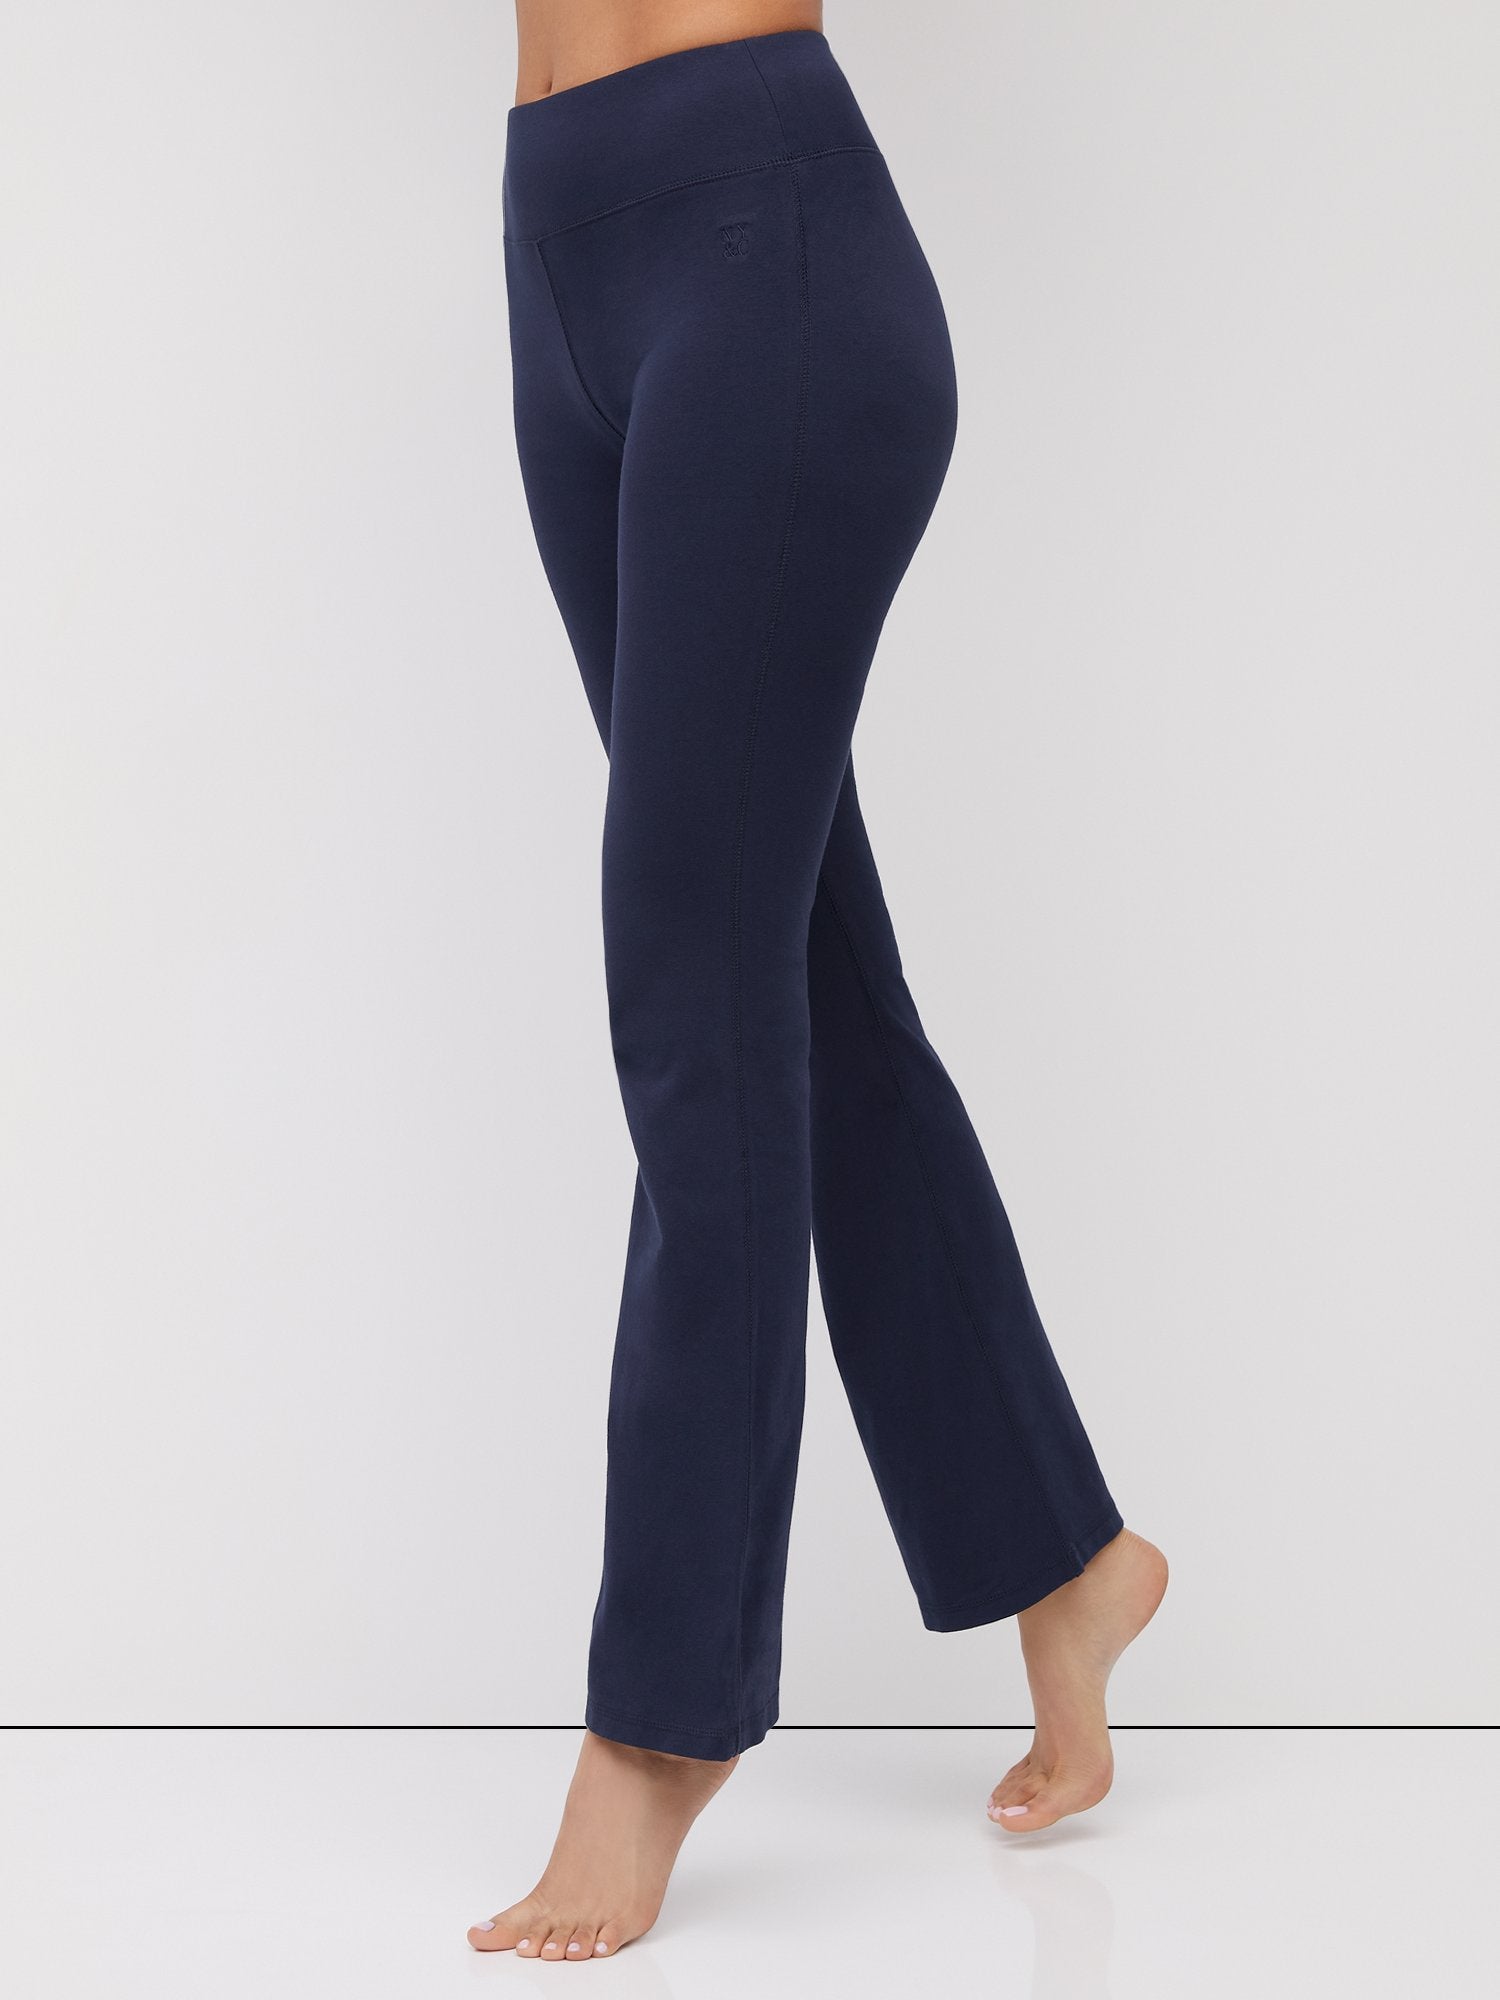 nsendm Unisex Pants Adult Long Yoga Pants for Women Tall Women Large Size  Pant Trouser High Waisted Slim Black Leather Yoga Pants for Women(Black, XL)  